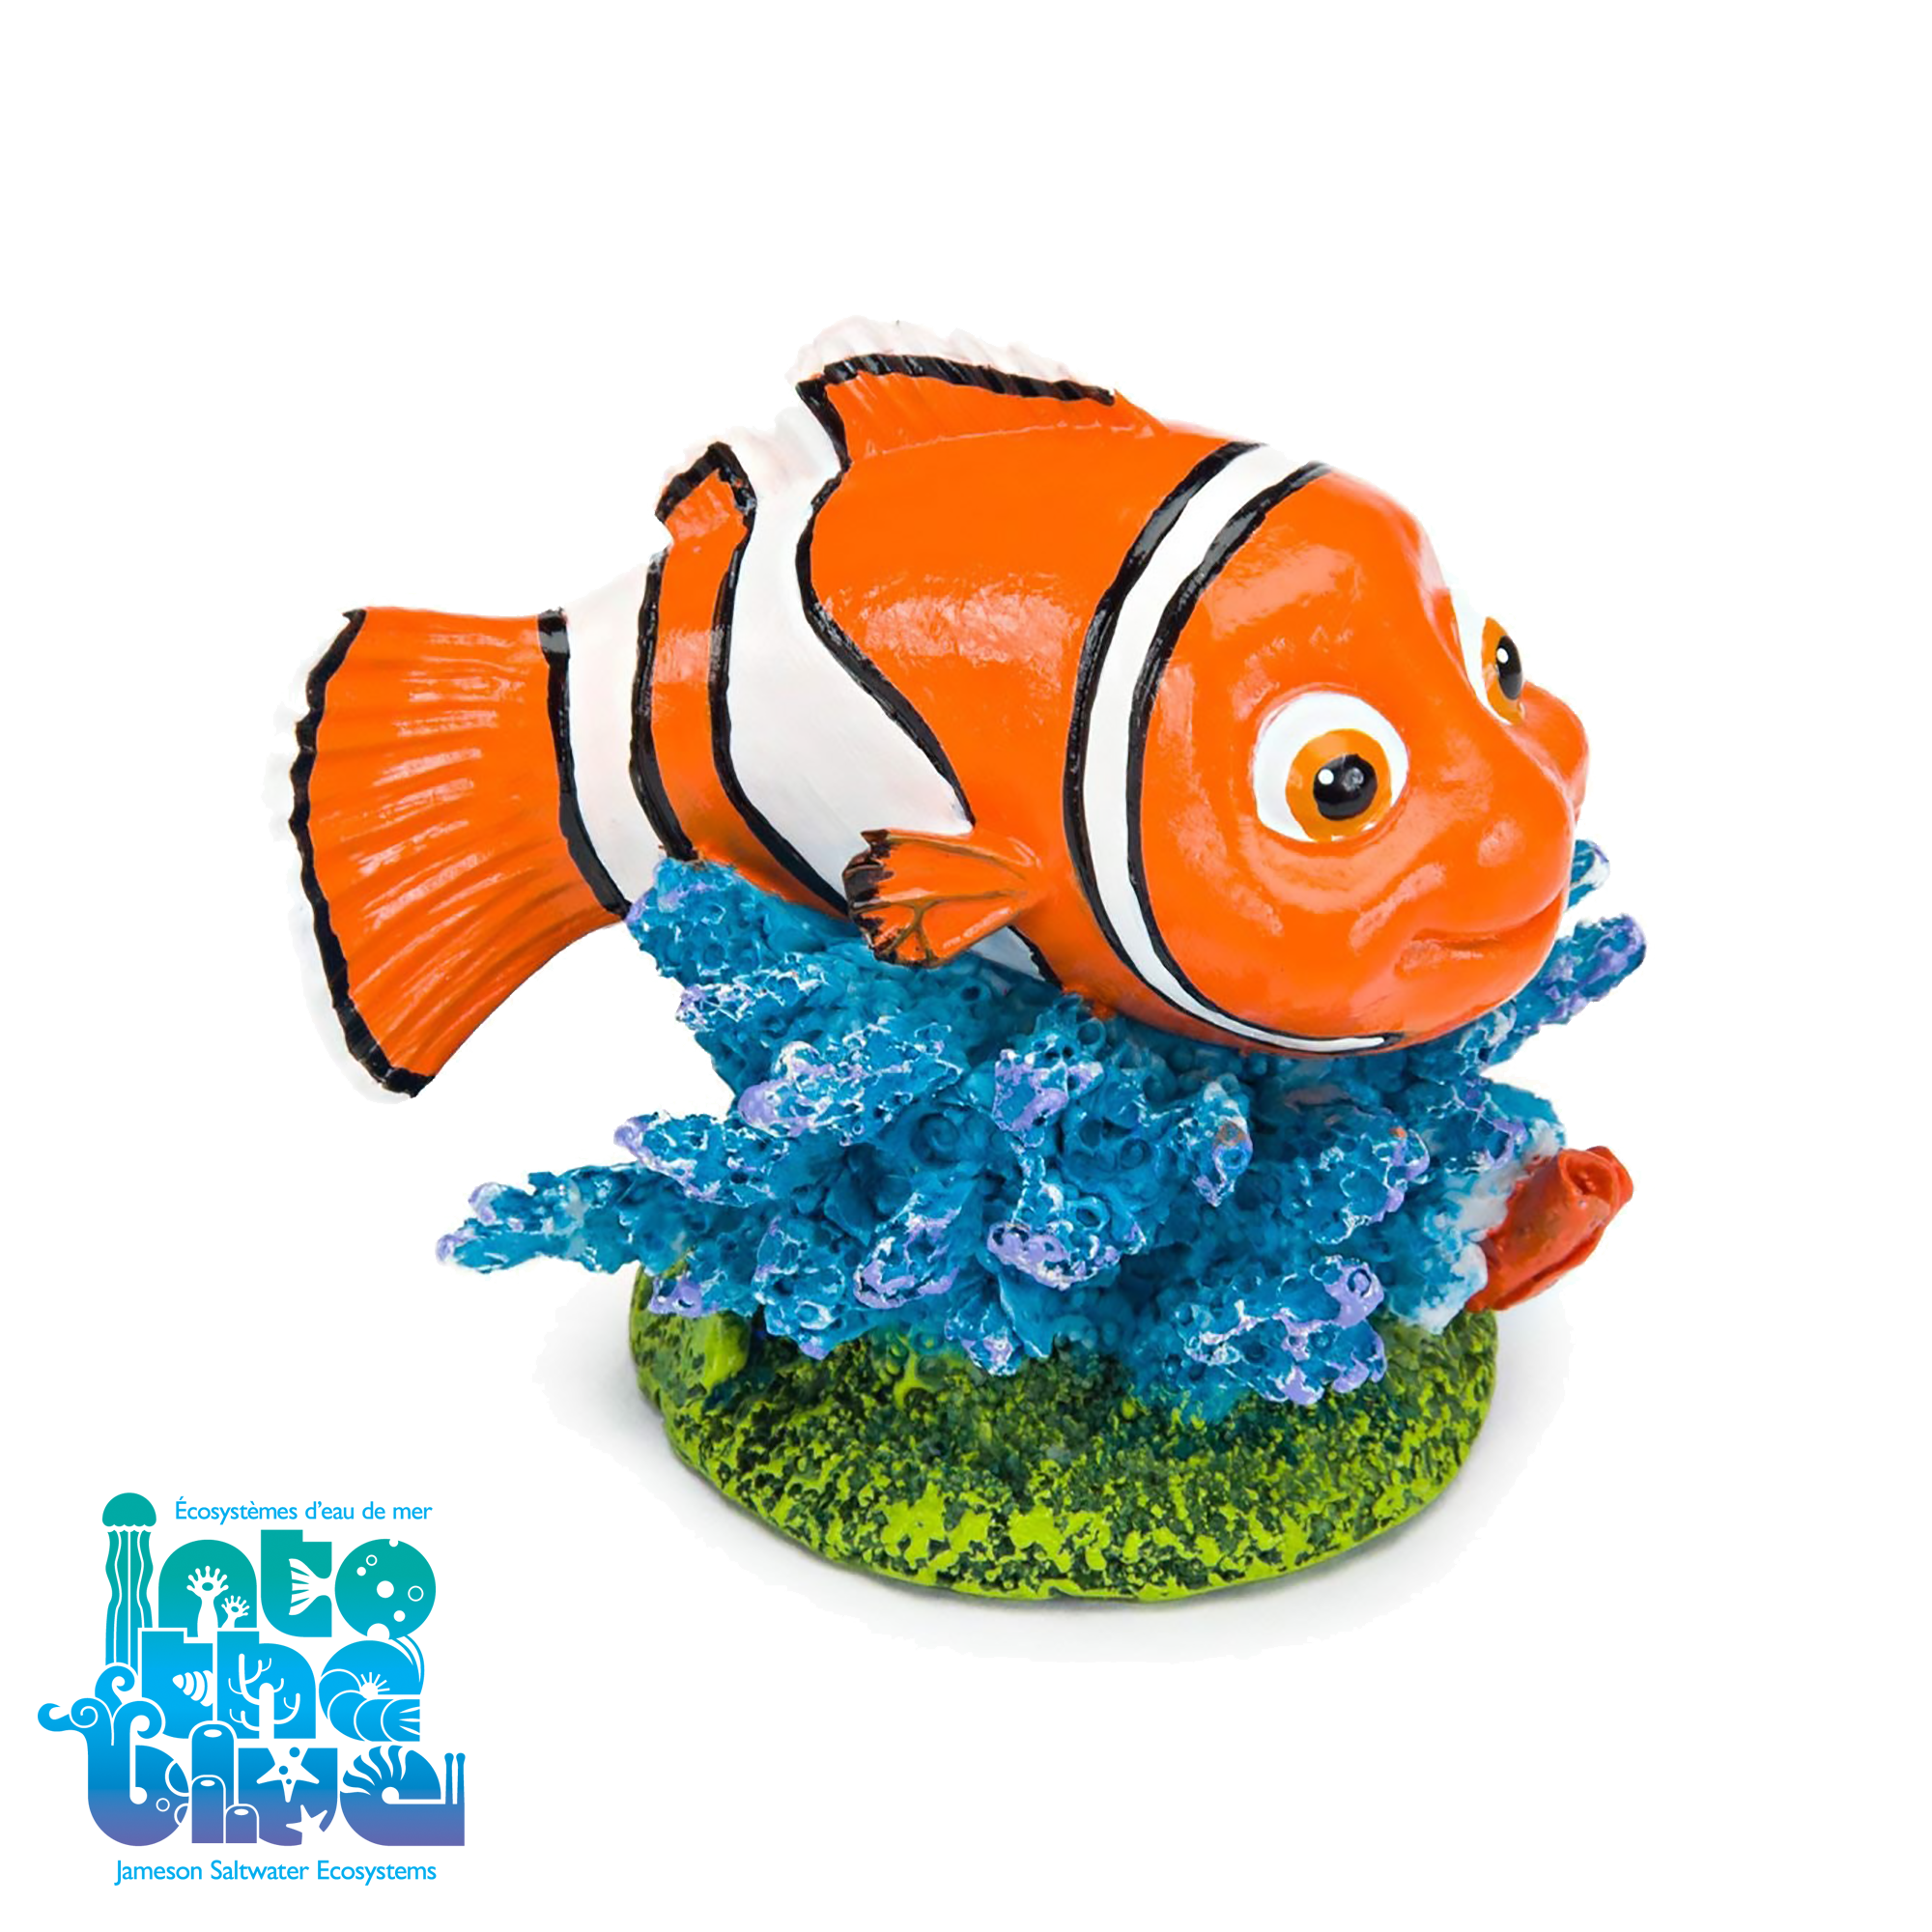 Penn-Plax - Aquarium Decor | Pixar - Finding Nemo | Nemo